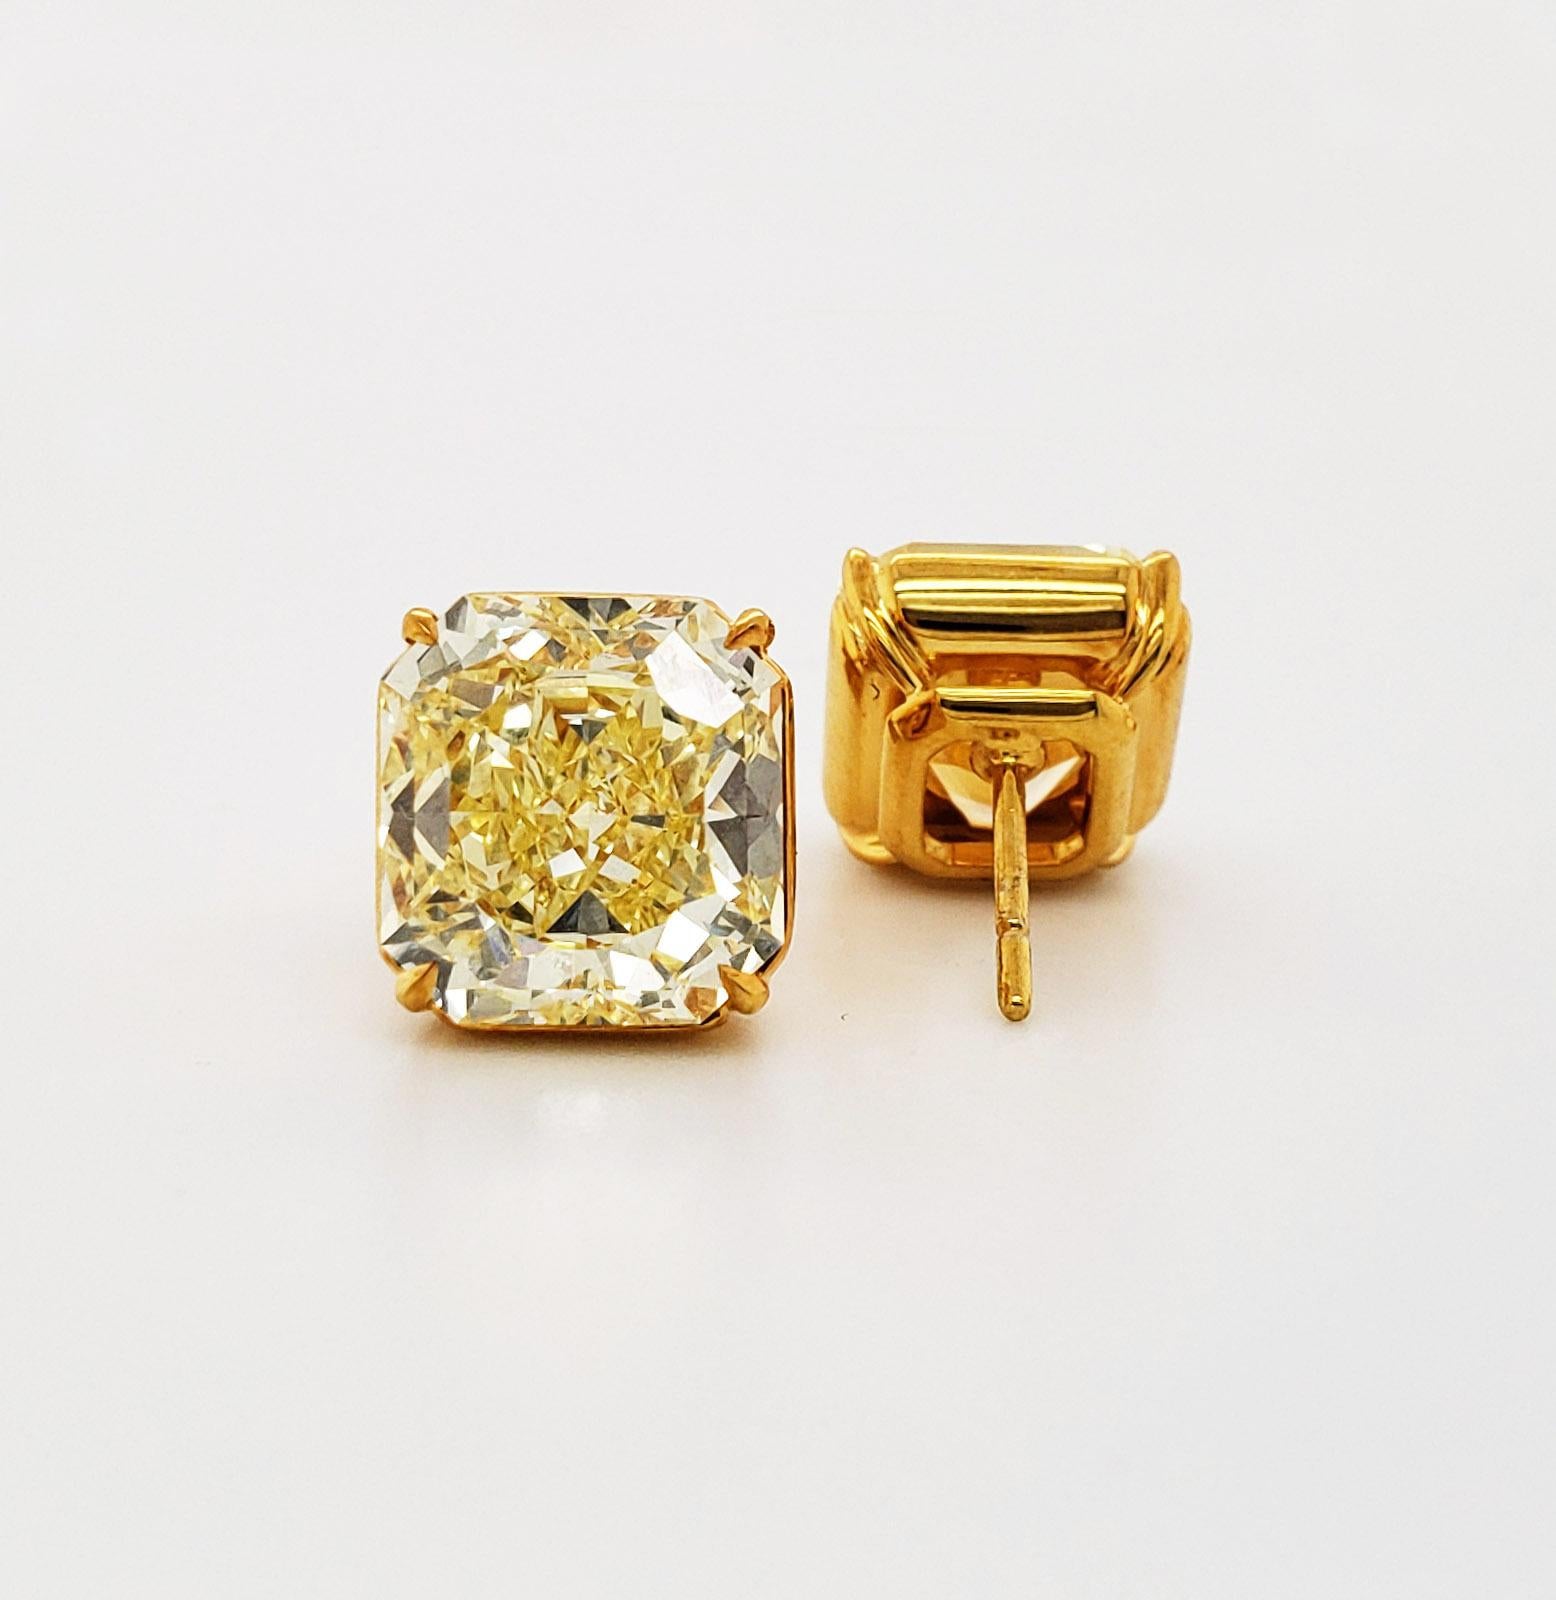 7 carat diamond earrings